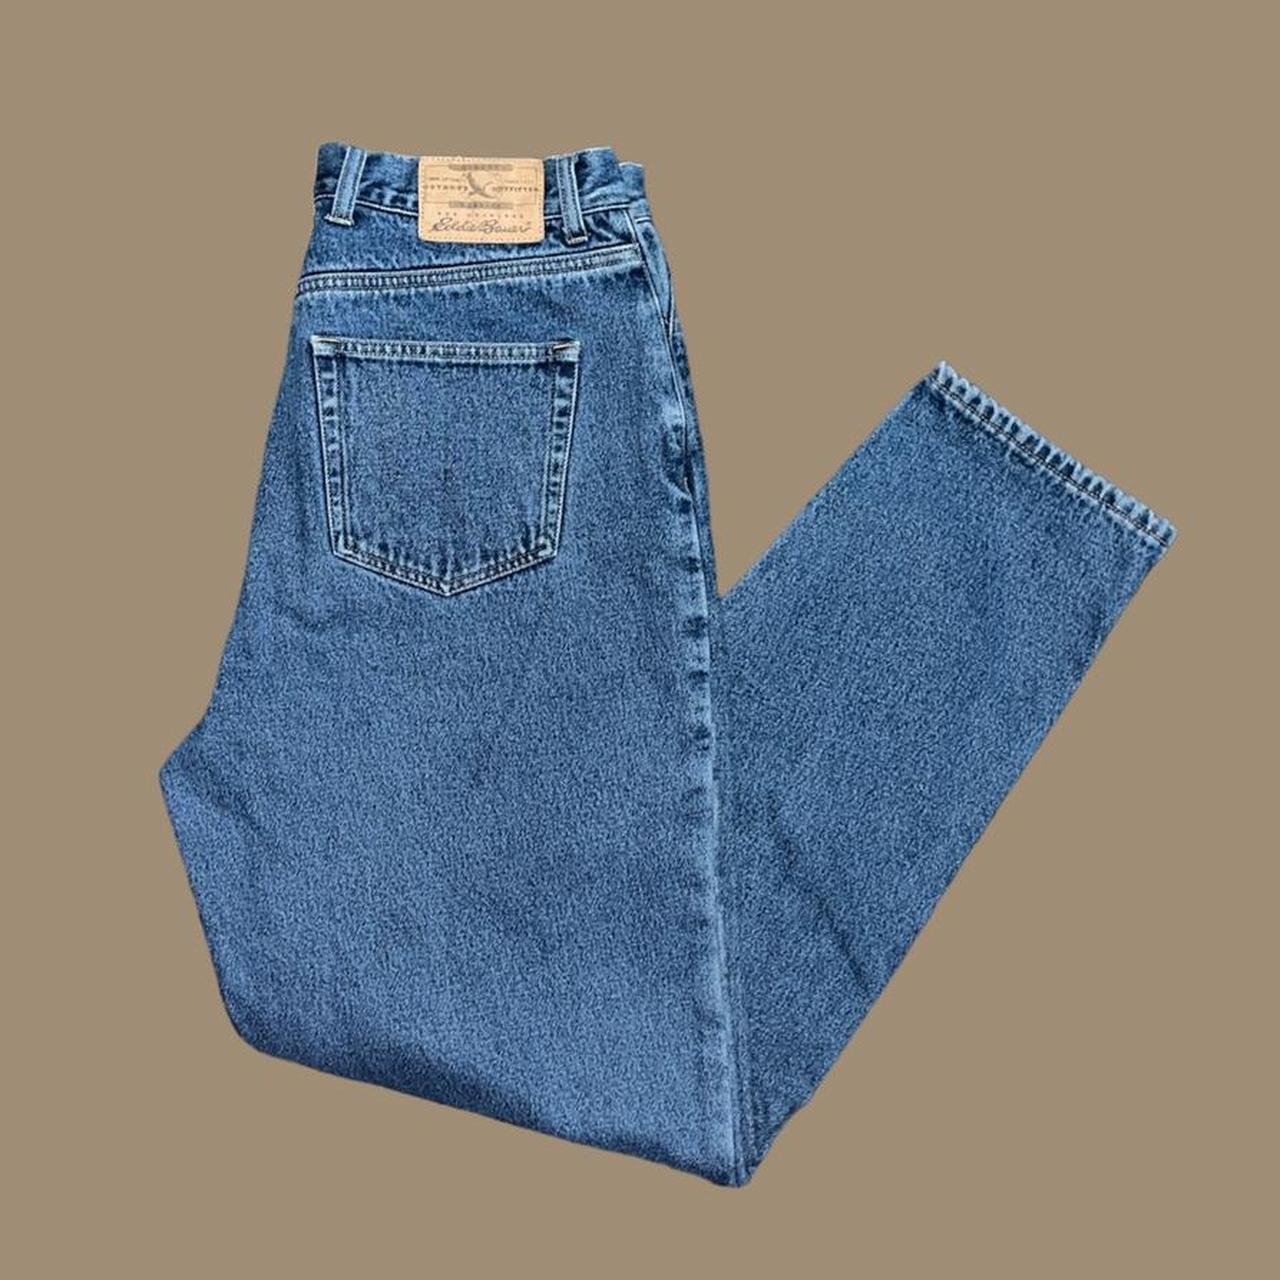 Eddie Bauer Women's Blue and Brown Jeans